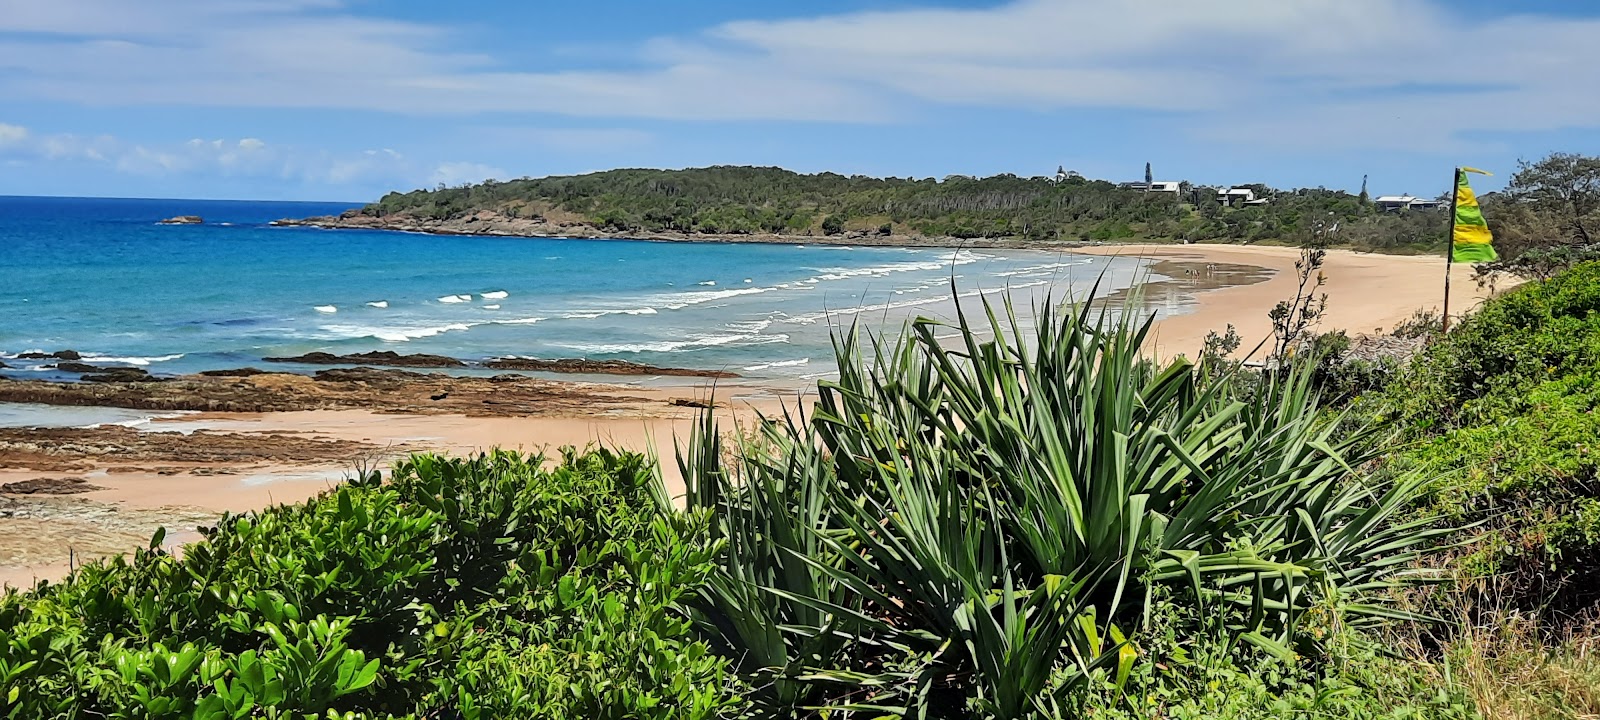 Foto di Ocean View Beach ubicato in zona naturale